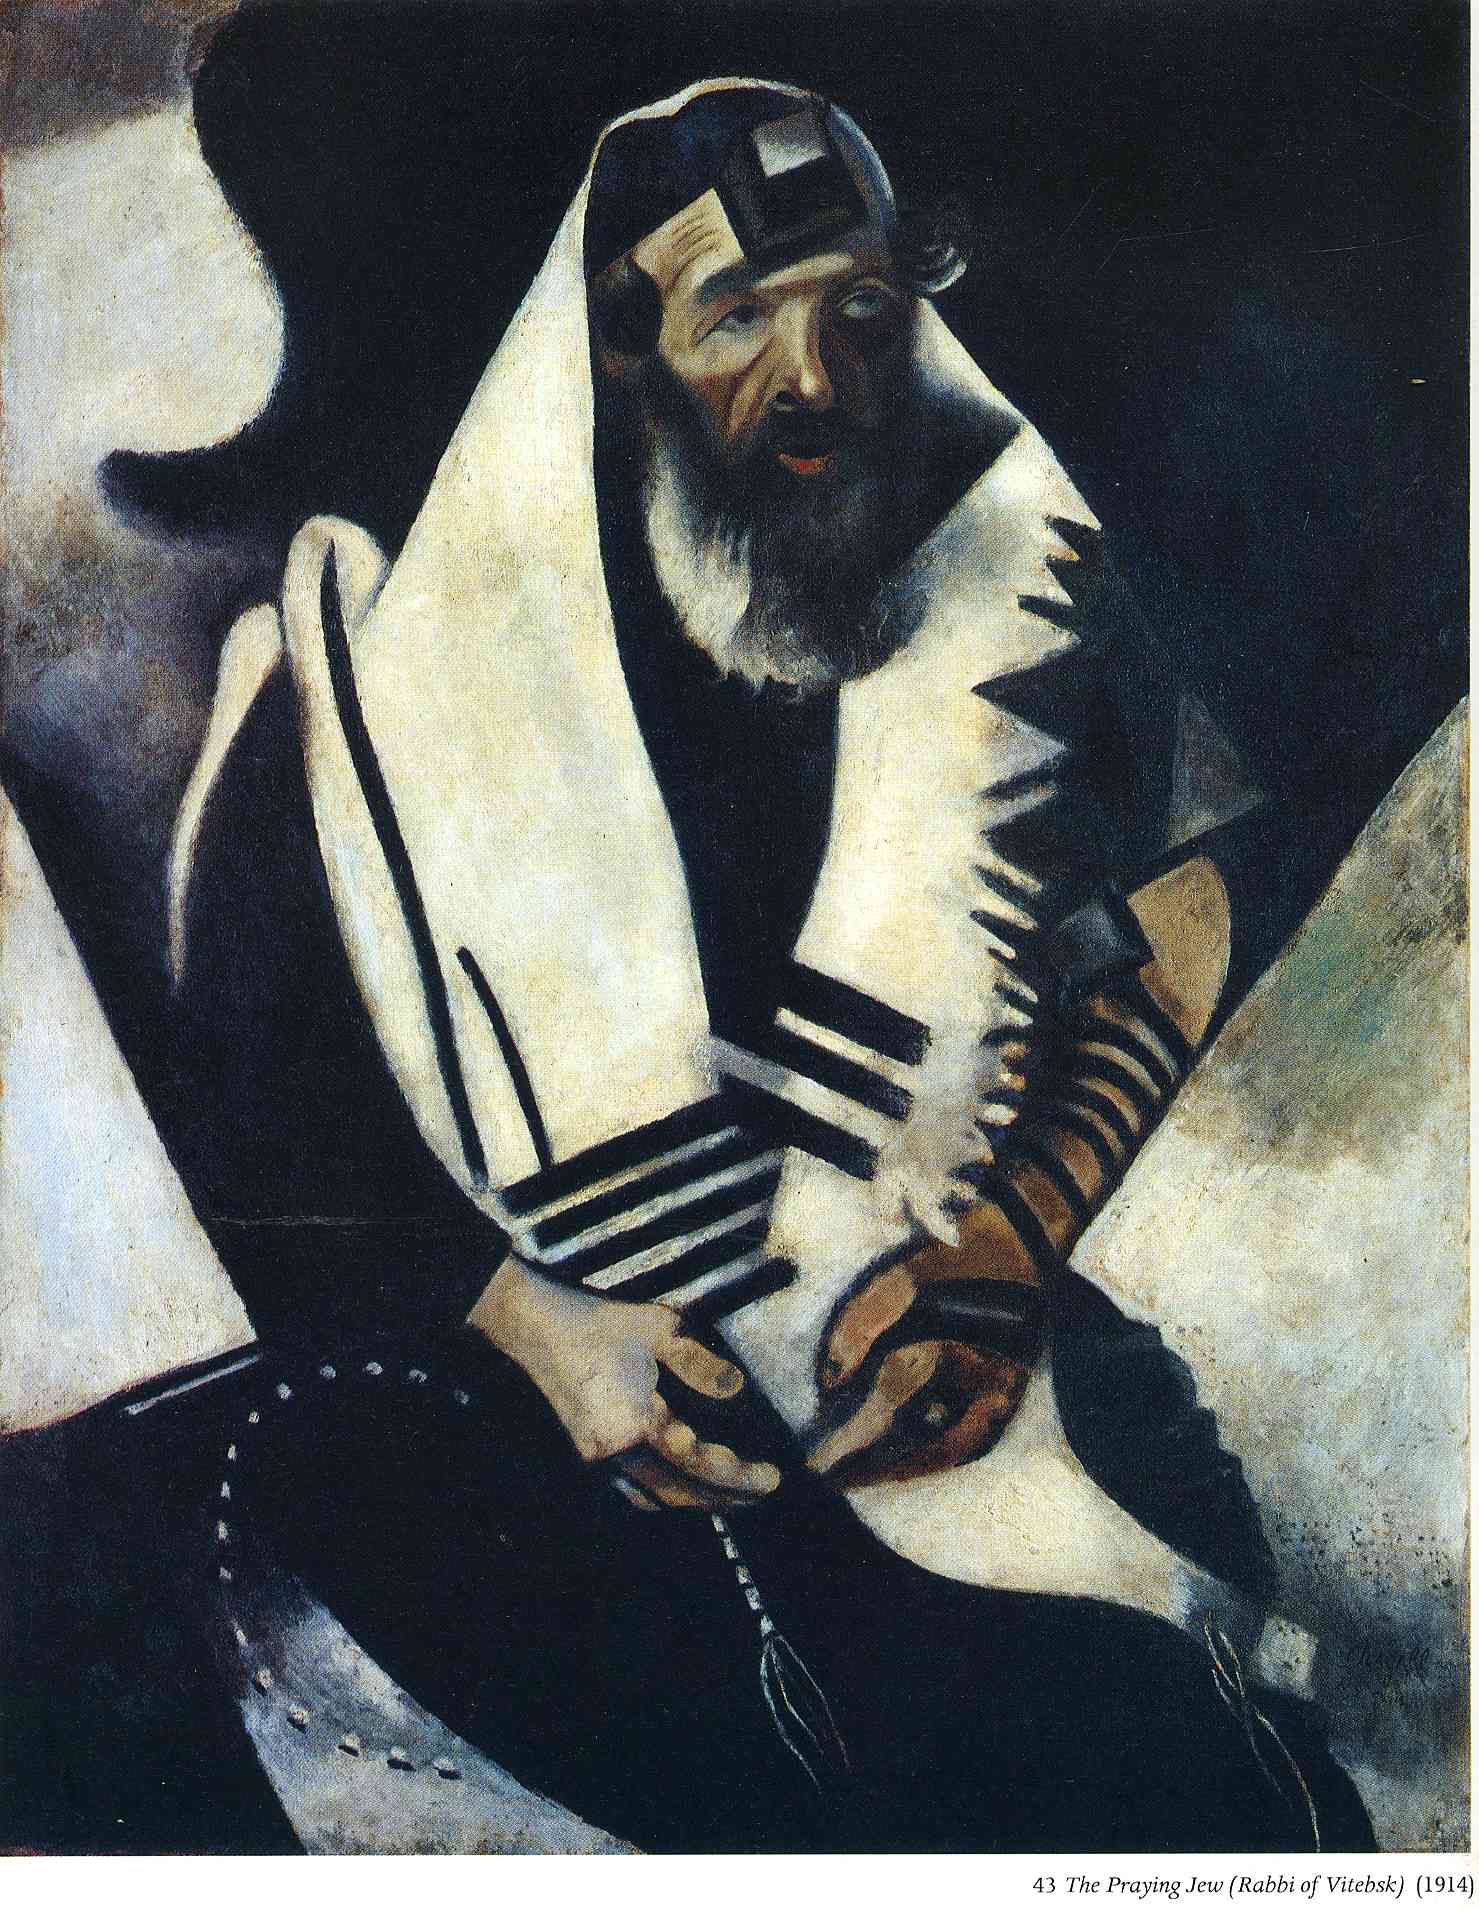 The Praying Jew (Rabbi of Vitebsk) (1914).